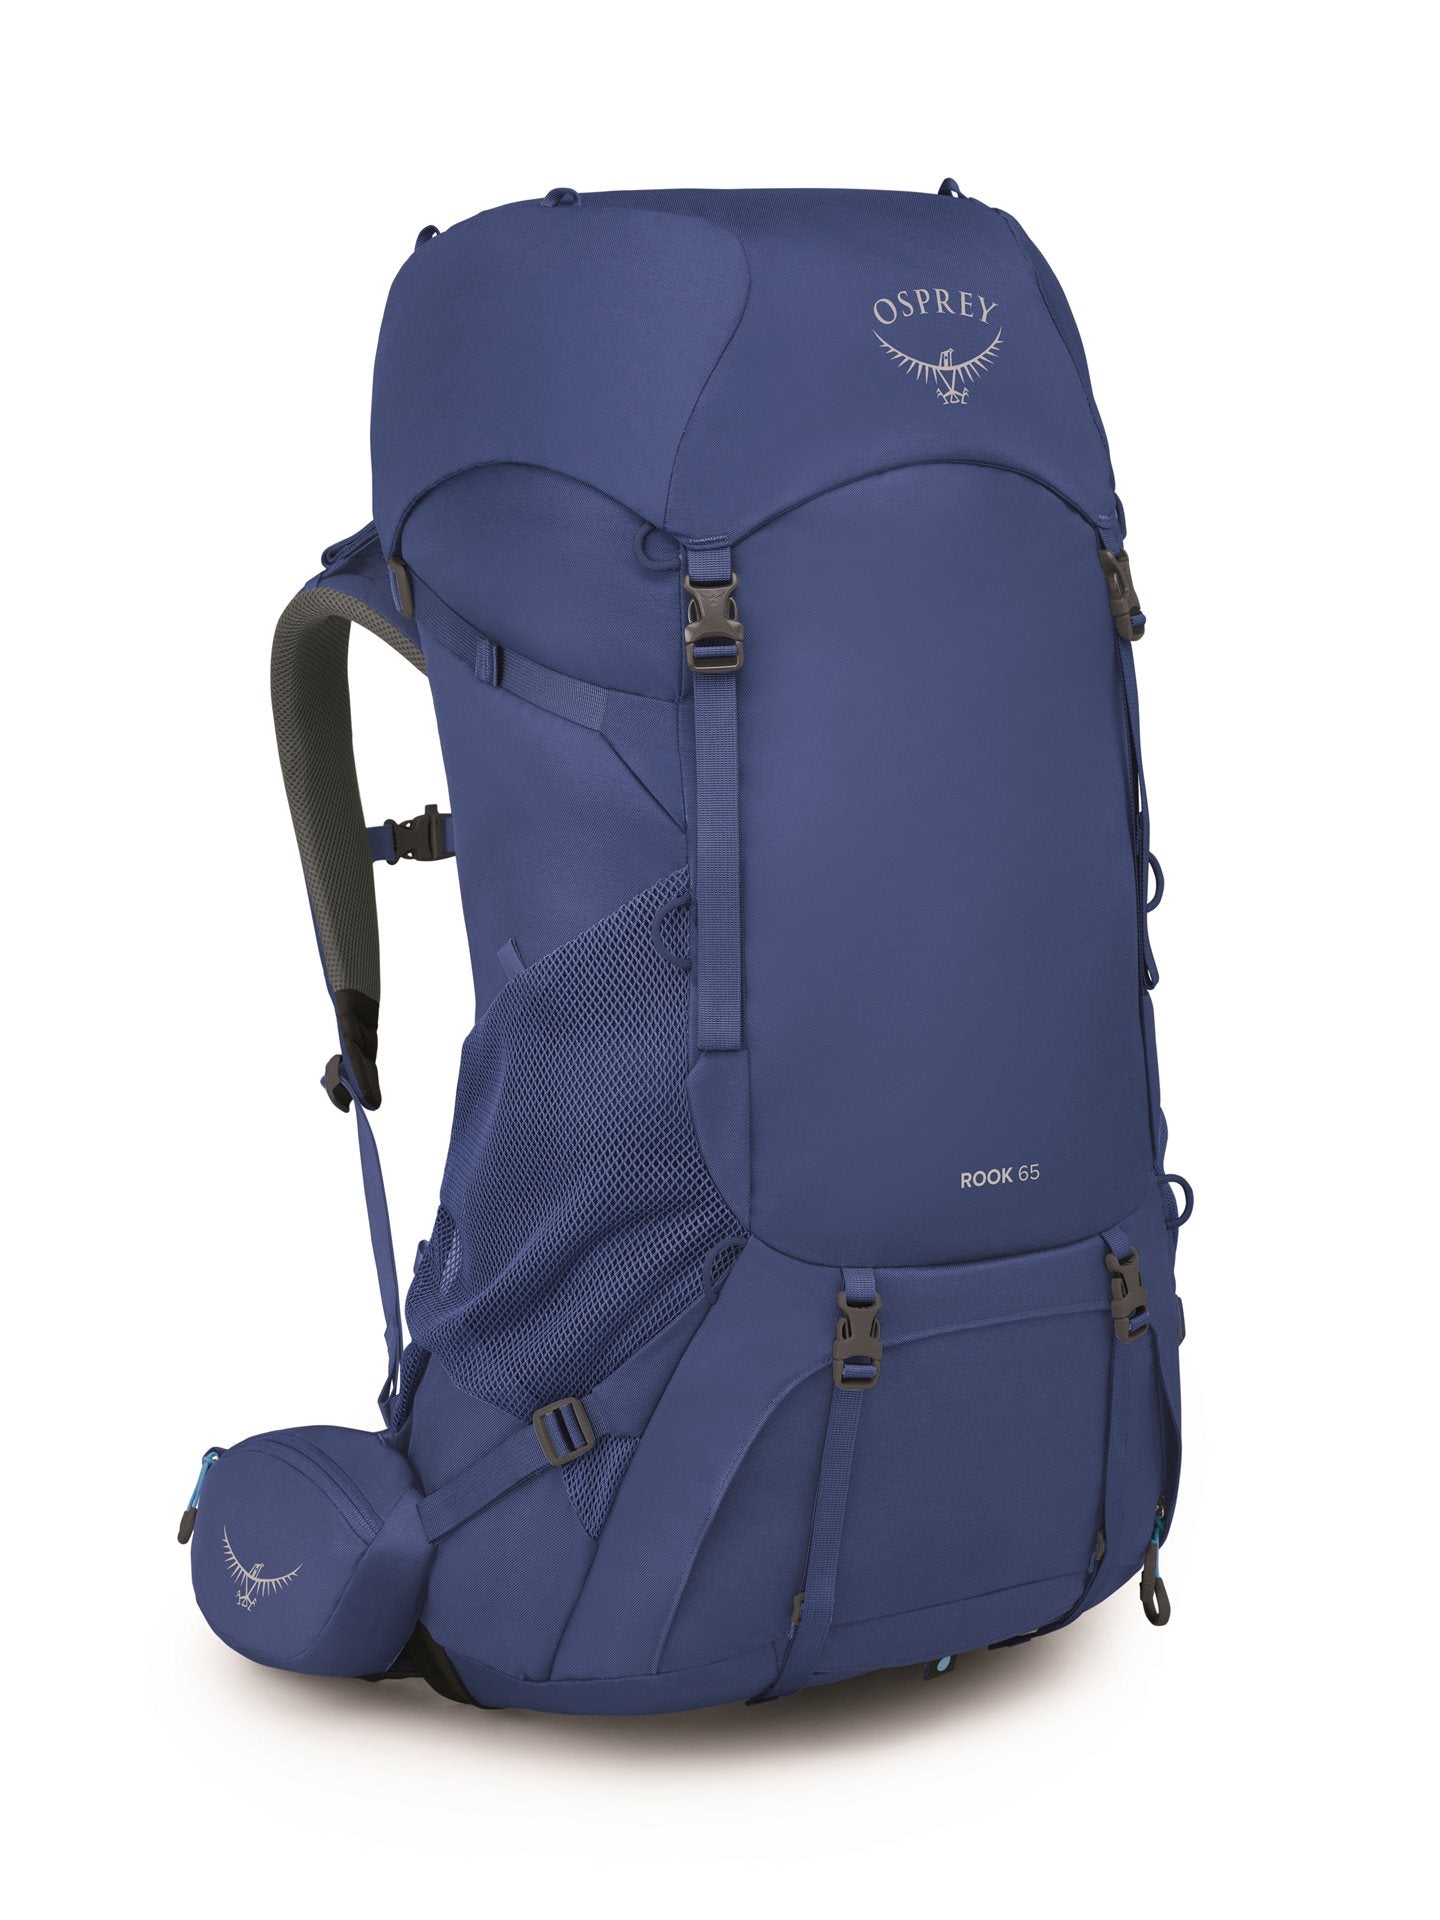 Osprey Rook 65 - Astology Blue/Blue Flame Backpack - Reisartikelen-nl